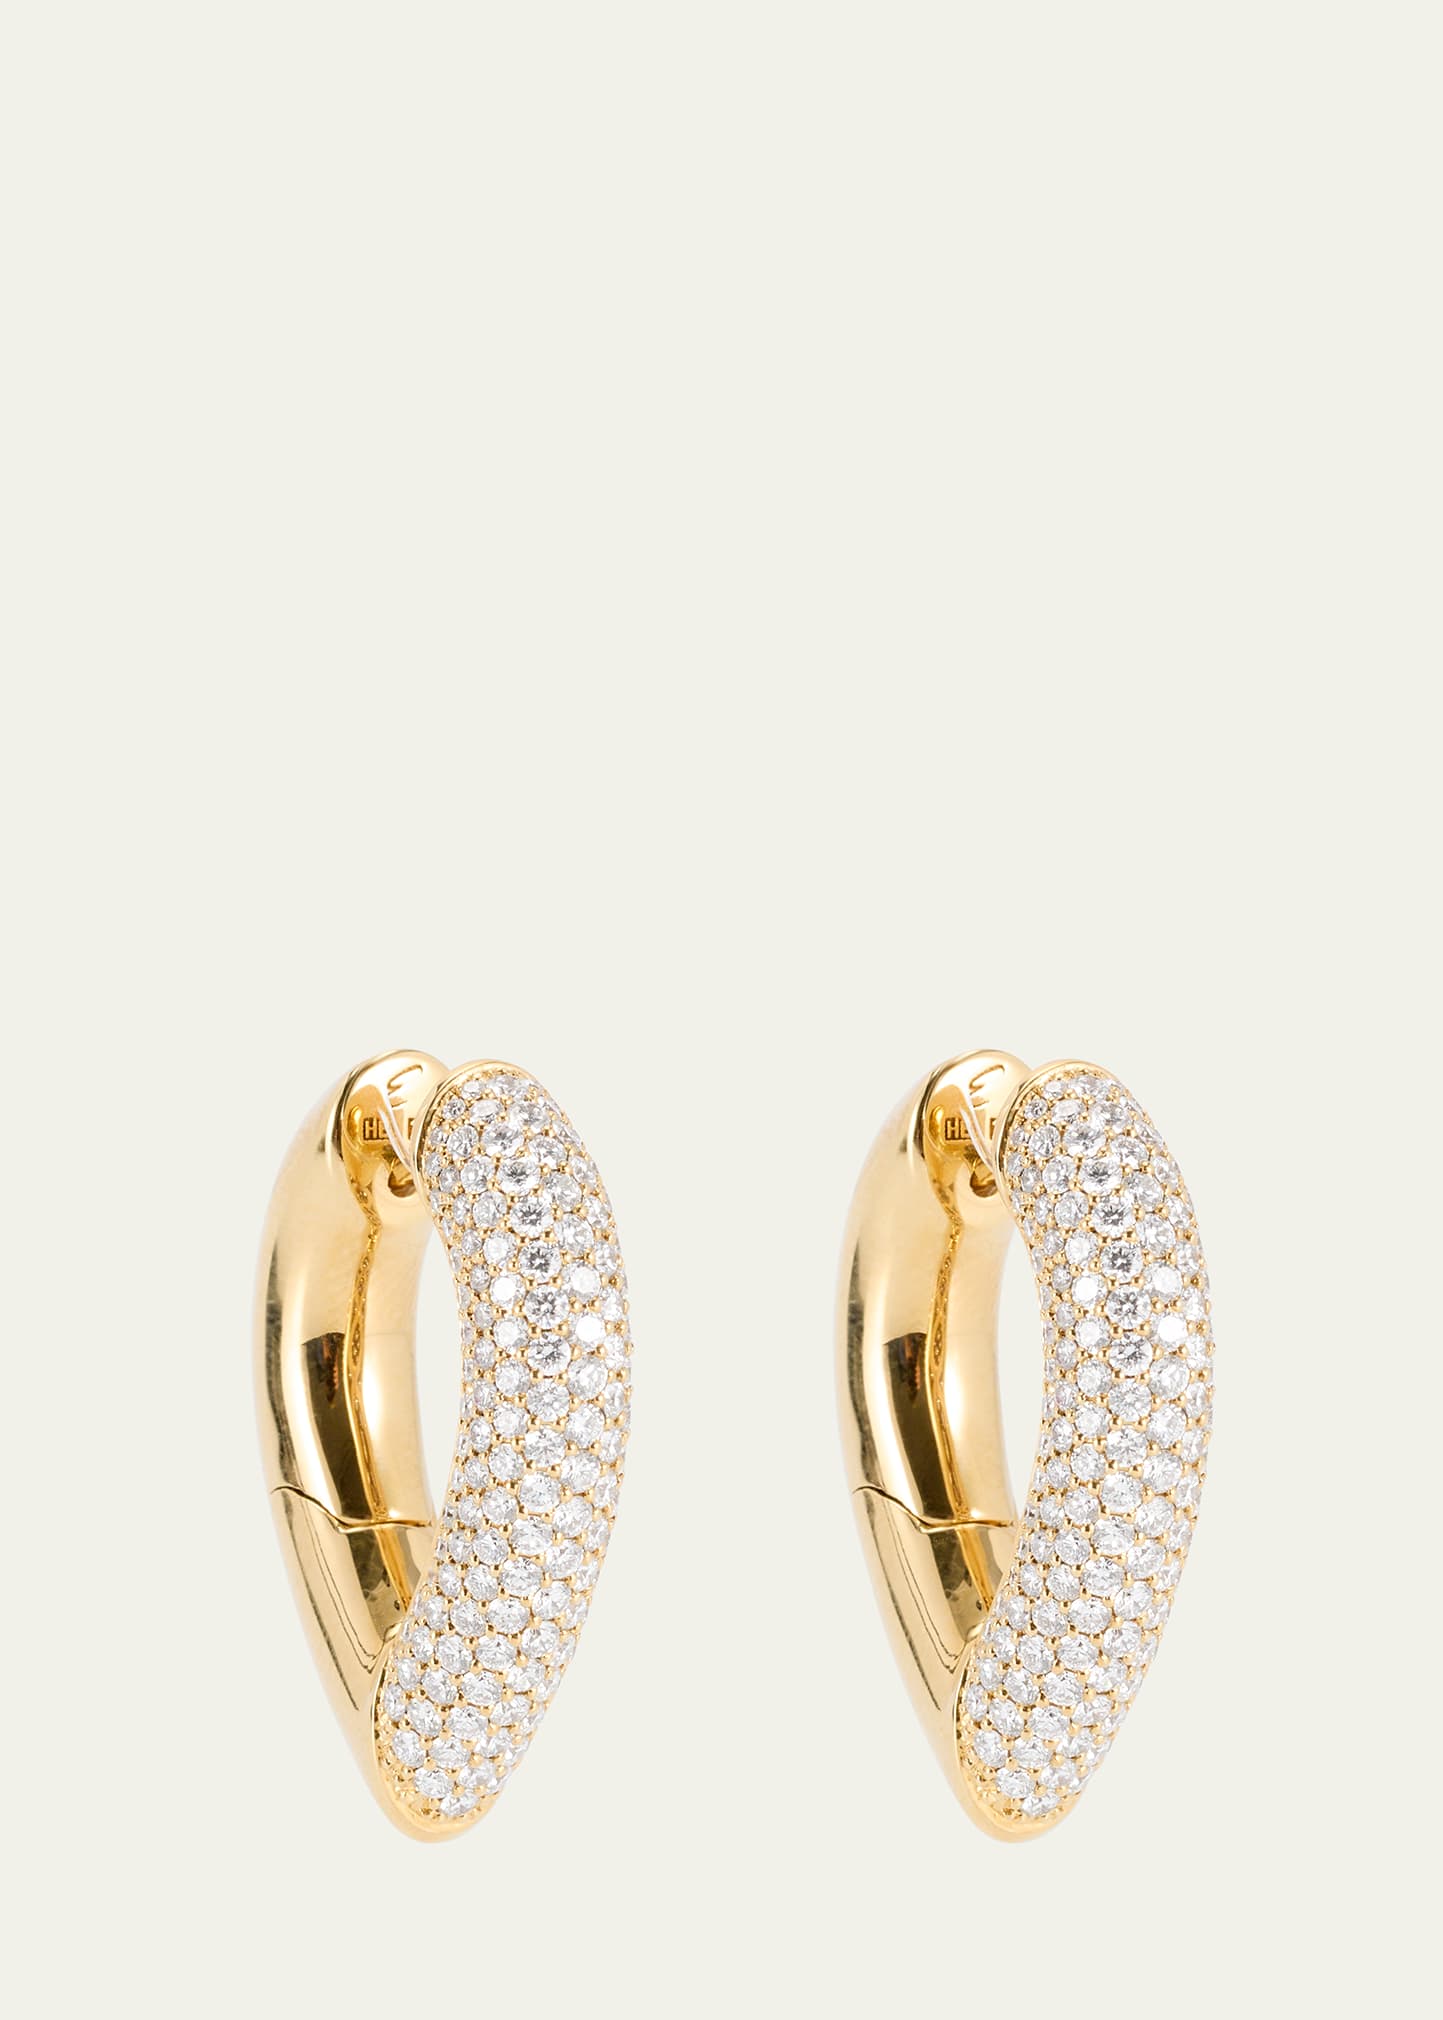 Engelbert 18k Yellow Gold Drop Link Earrings With Diamonds. 28mm